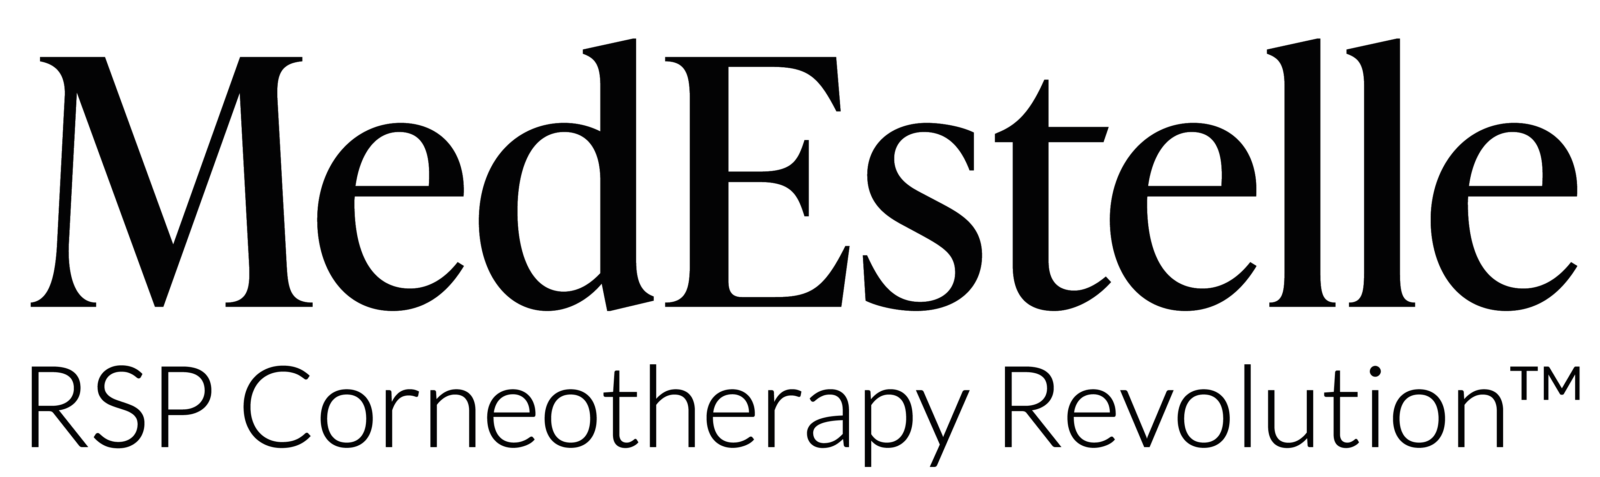 logo Medestelle rsp corneotherapy revolution white-01-01